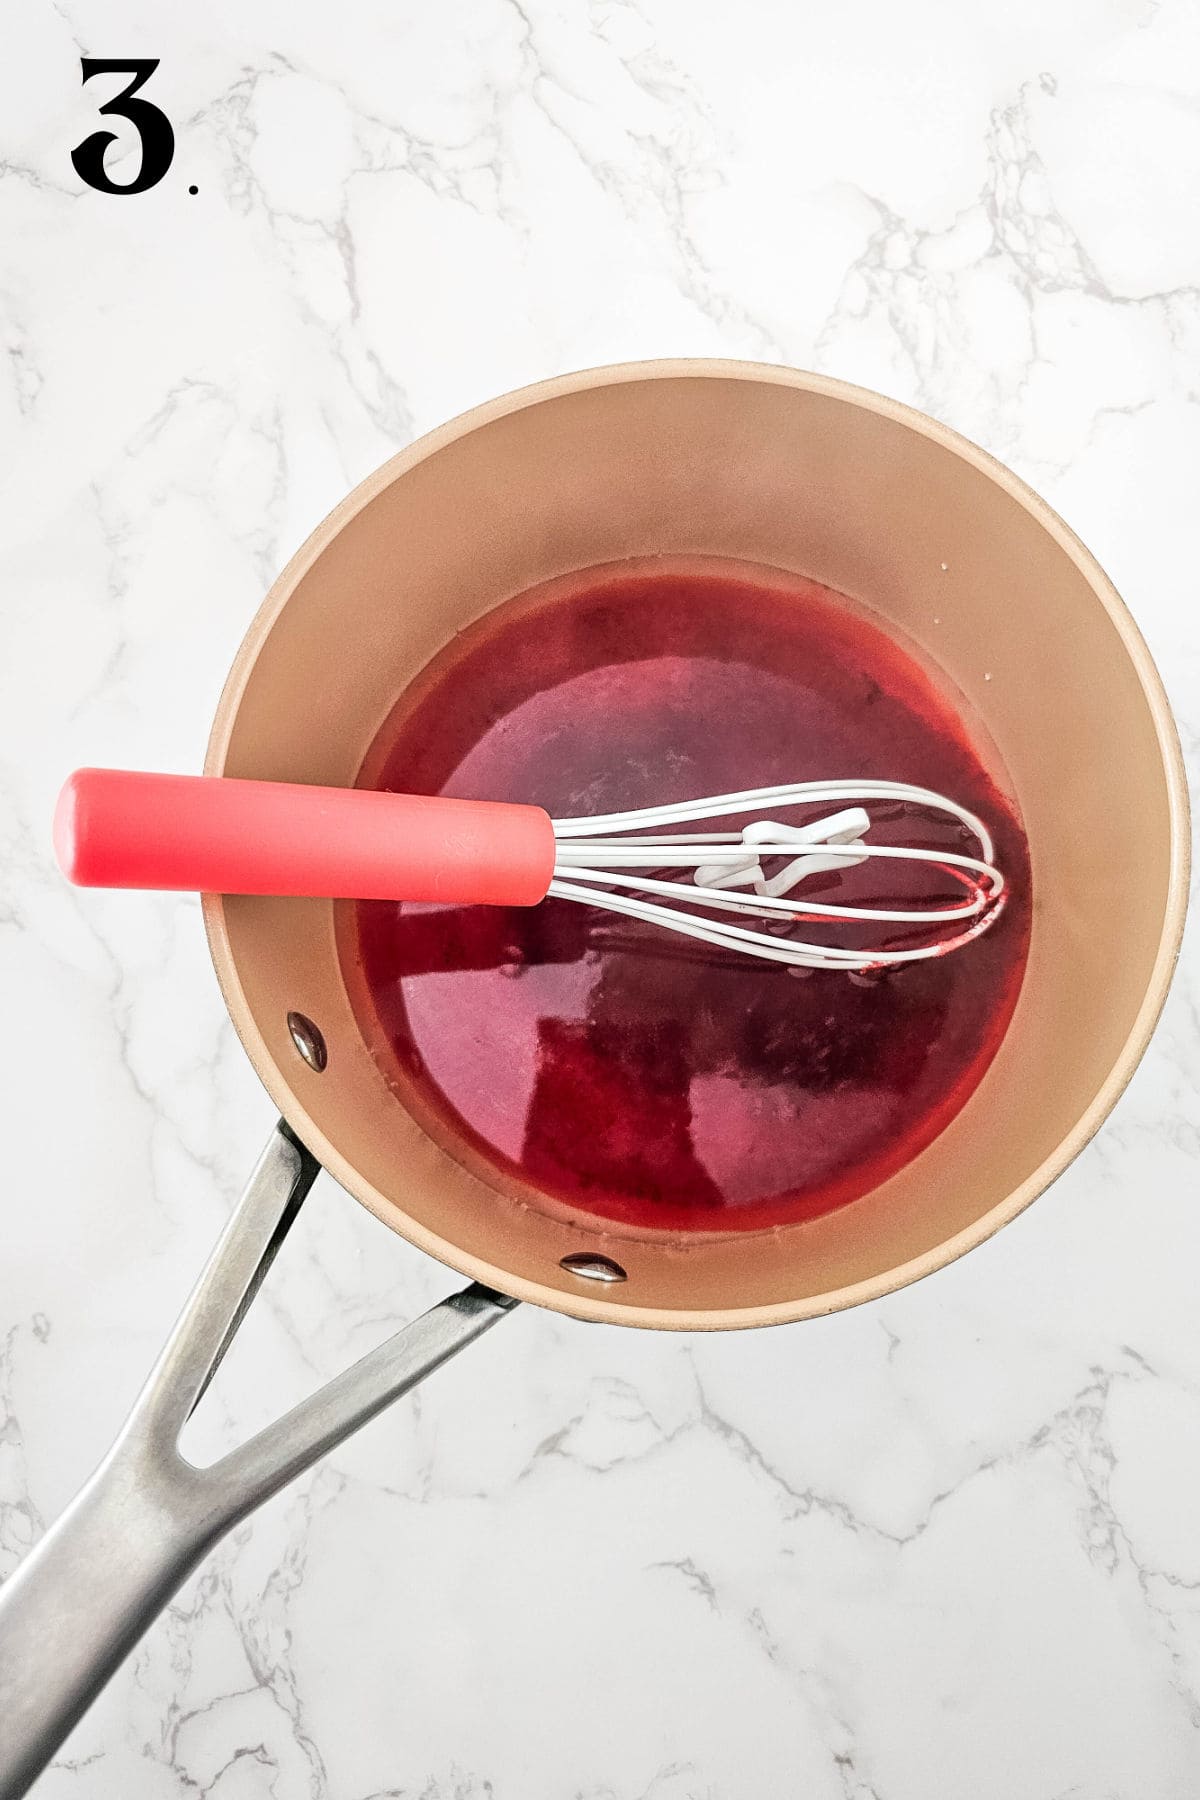 How to Make Cherry Poke Cake - Step 3 preparing jello in pan.